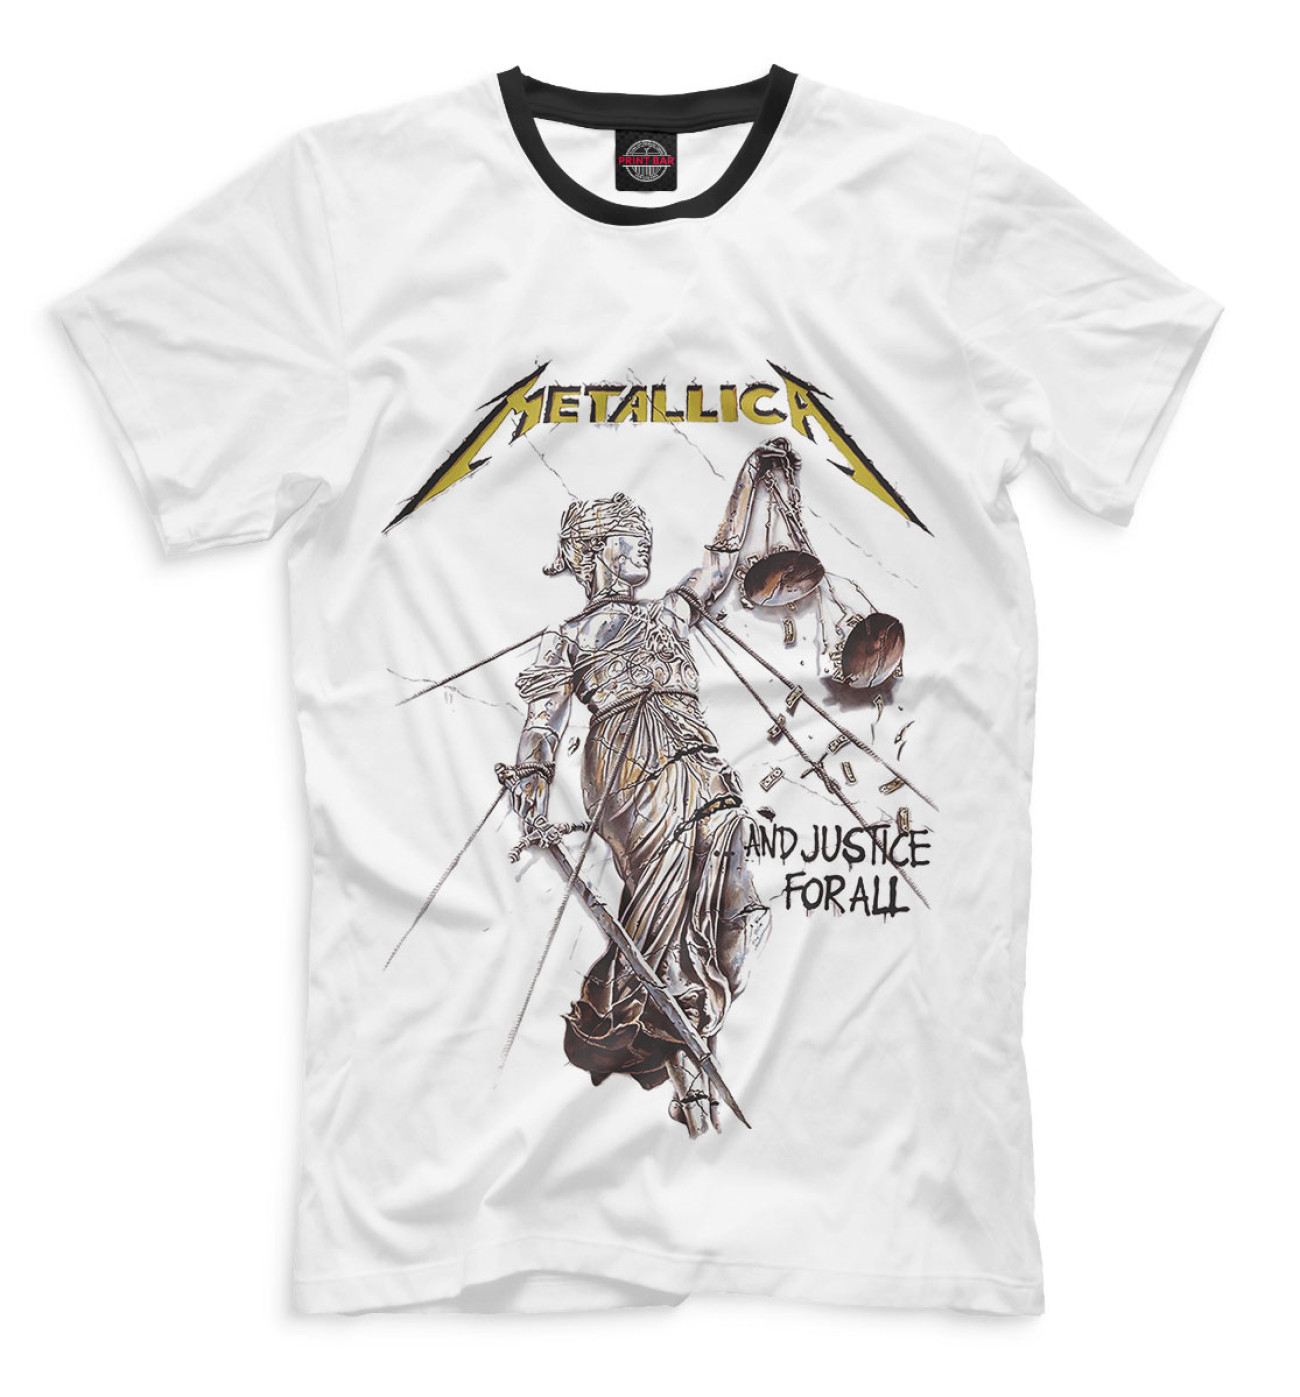 Мужская Футболка Metallica And Justice for All, артикул: MET-763744-fut-2